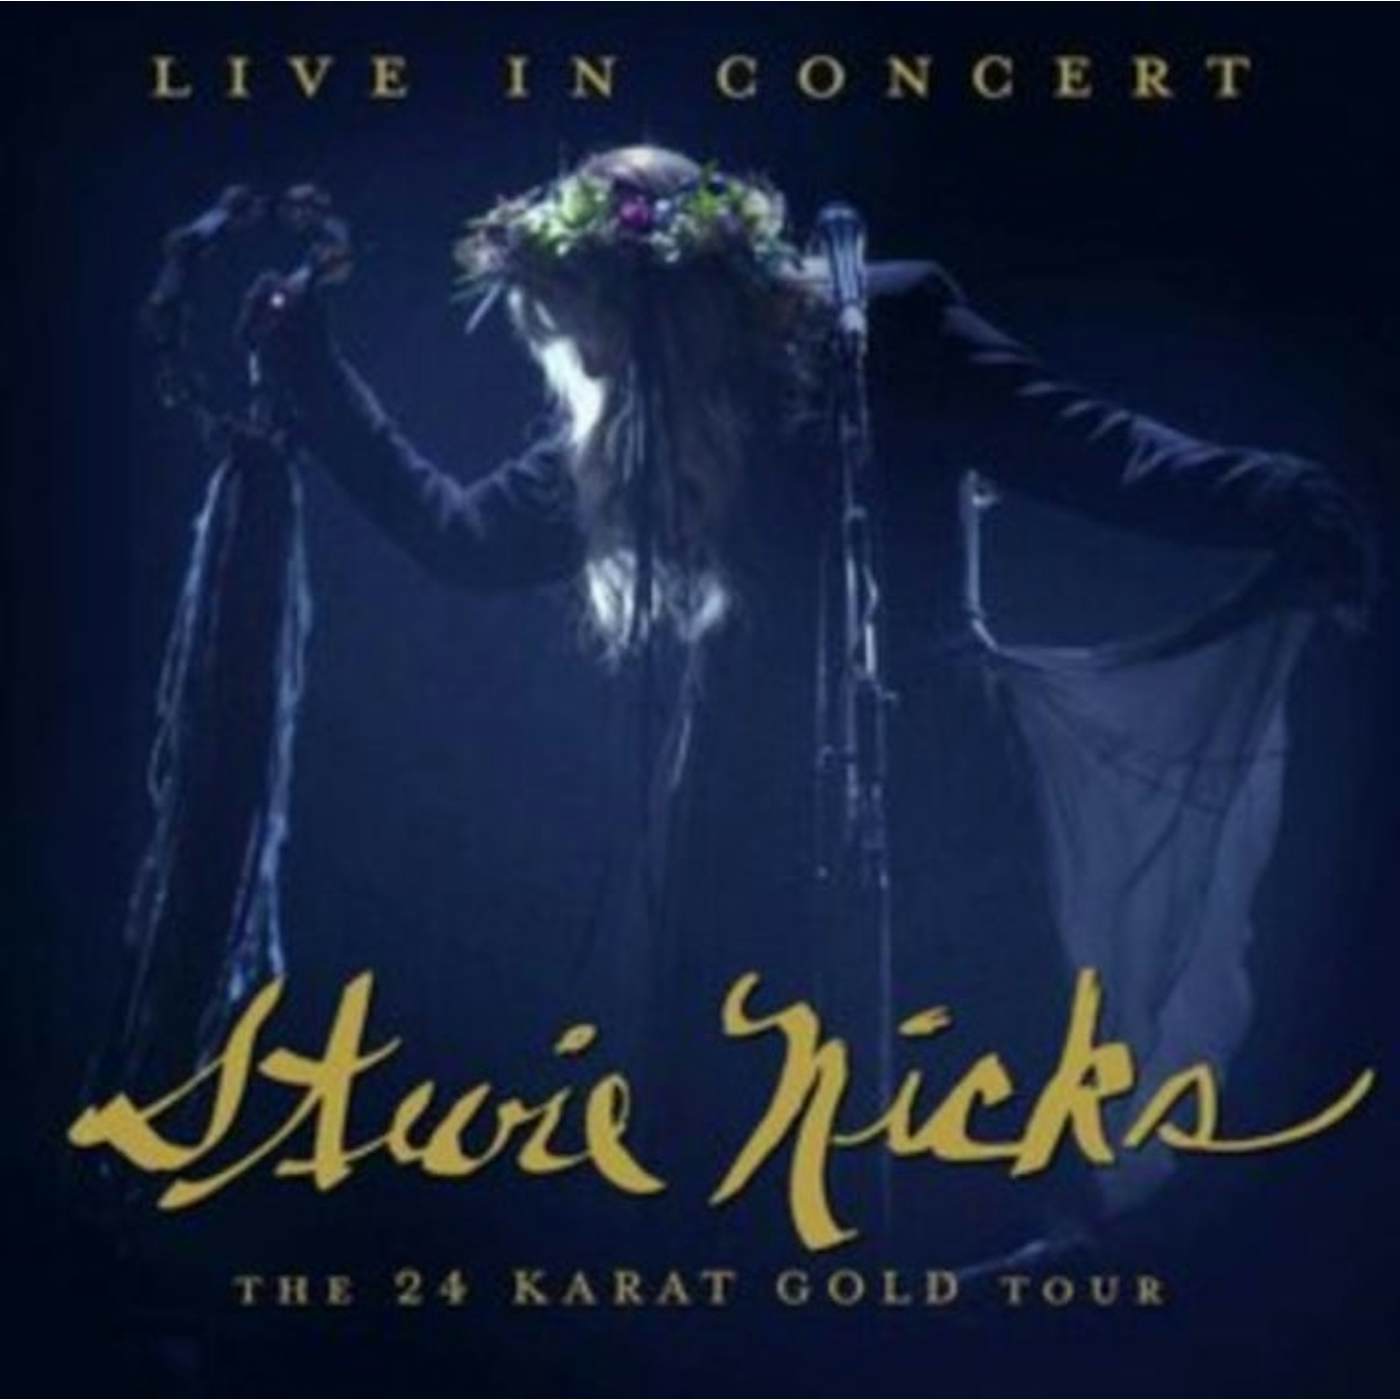 Stevie Nicks LP Vinyl Record - Live In Concert The 24 Karat Gold Tour